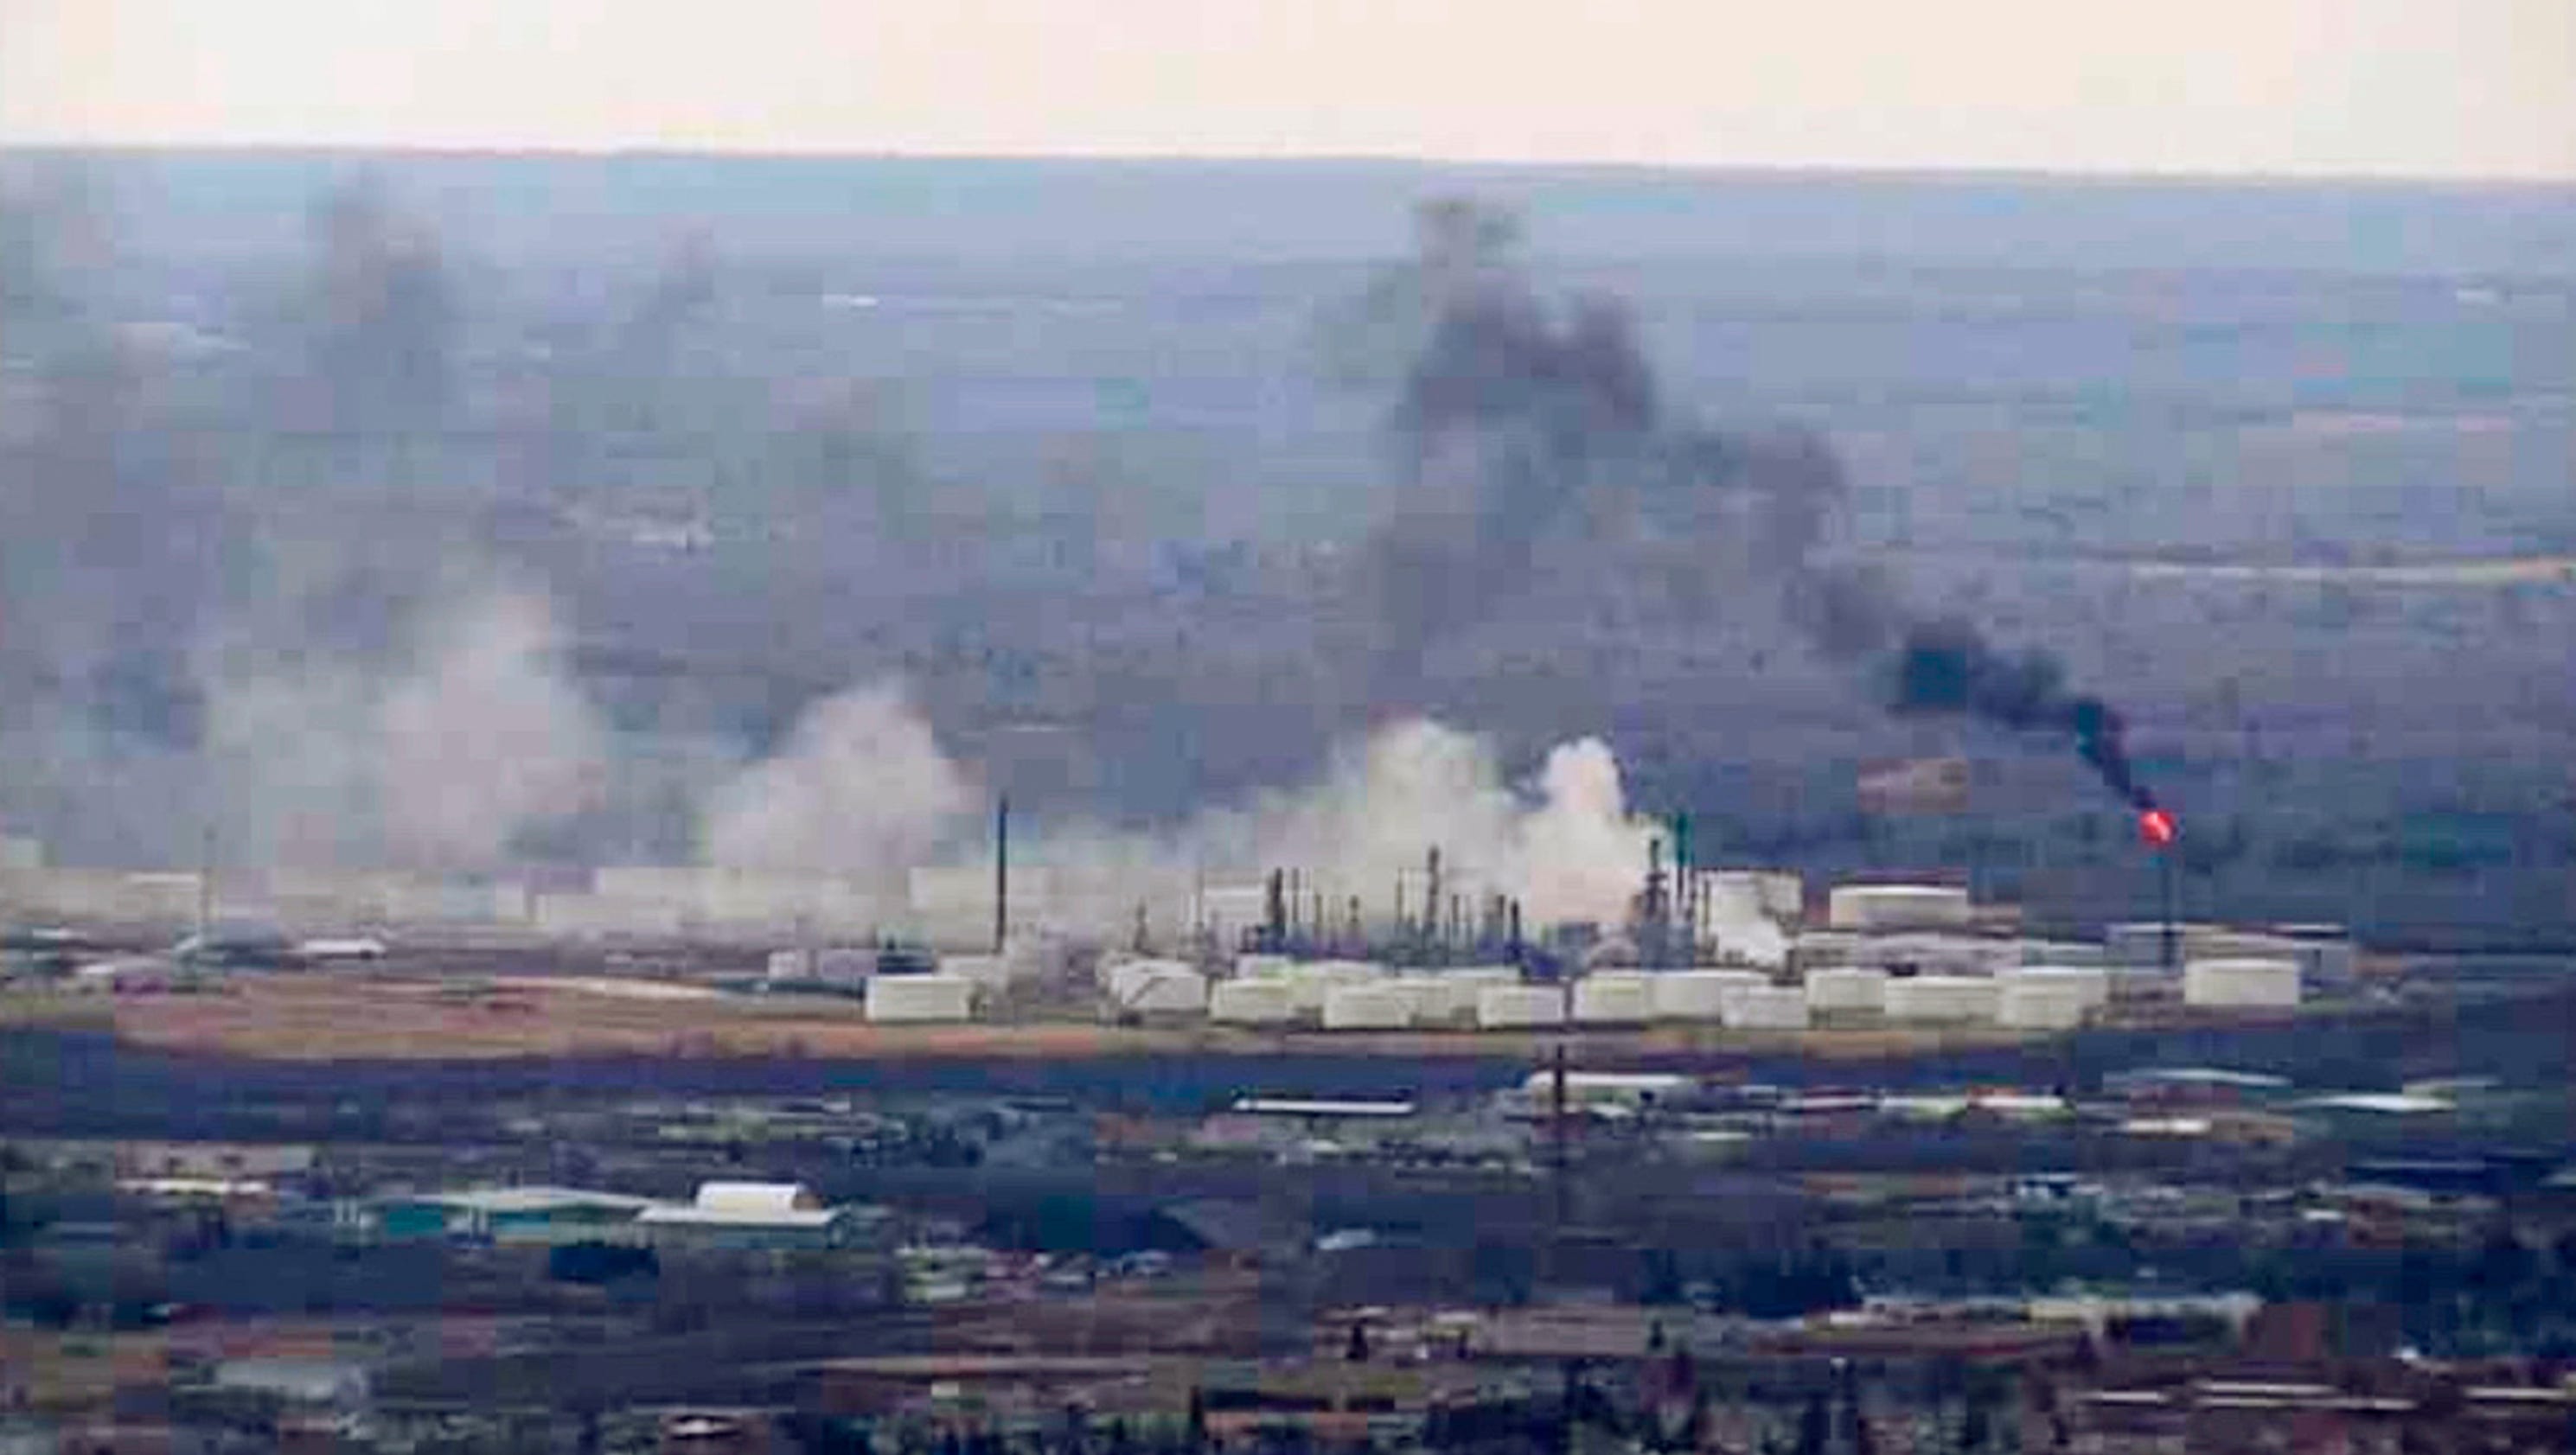 Oil refinery in northern Wisconsin rocked by blast